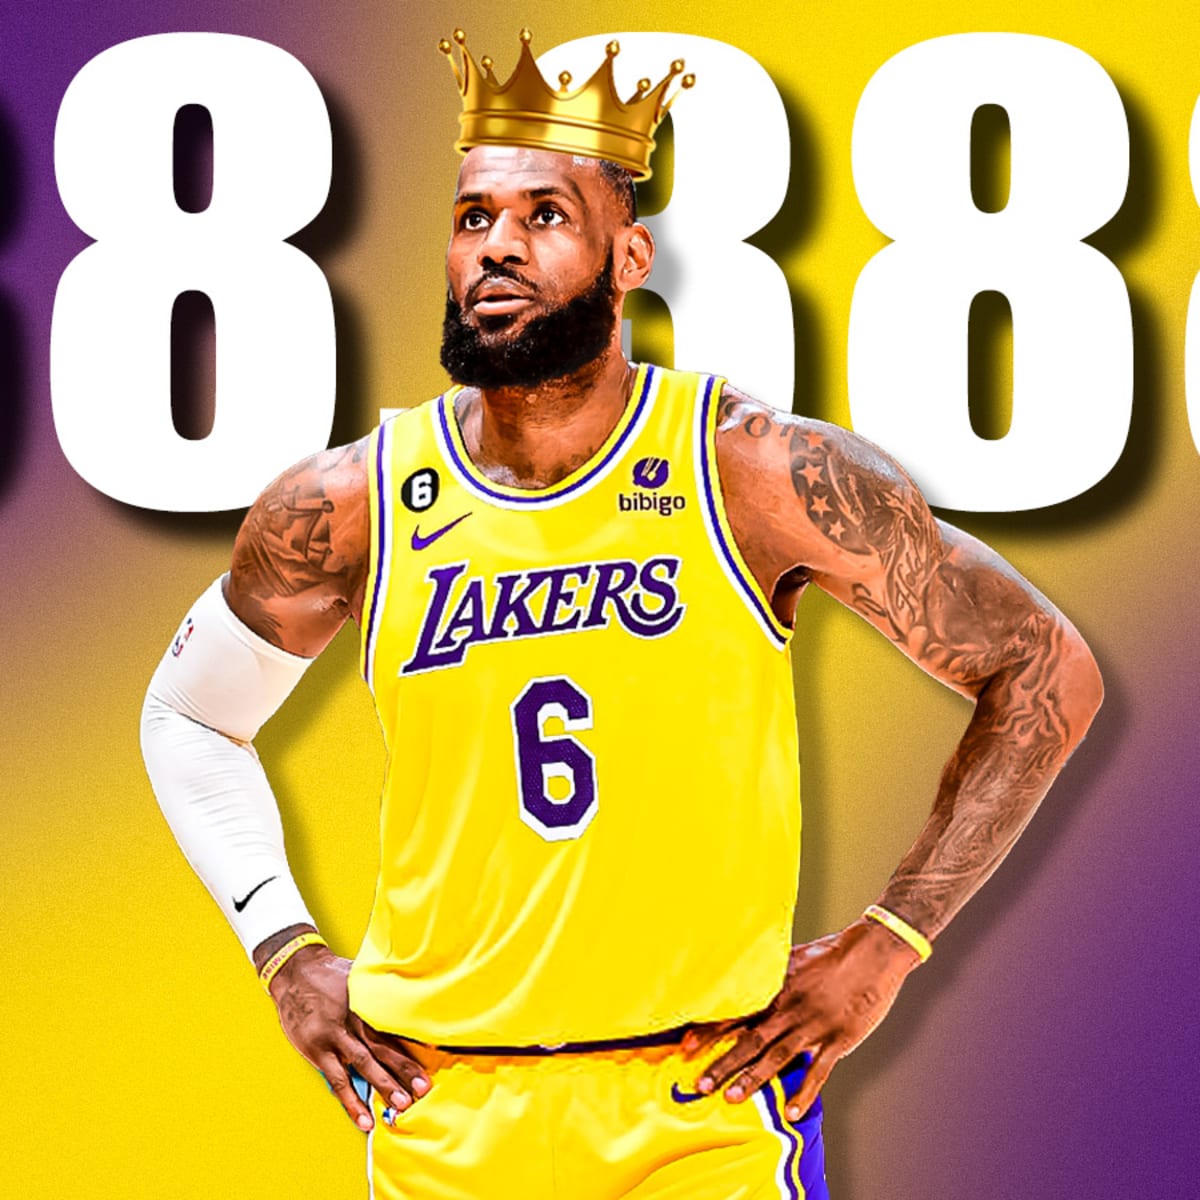 LeBron James breaks NBA scoring record with his 38,388th point, surpassing  Kareem Abdul-Jabbar